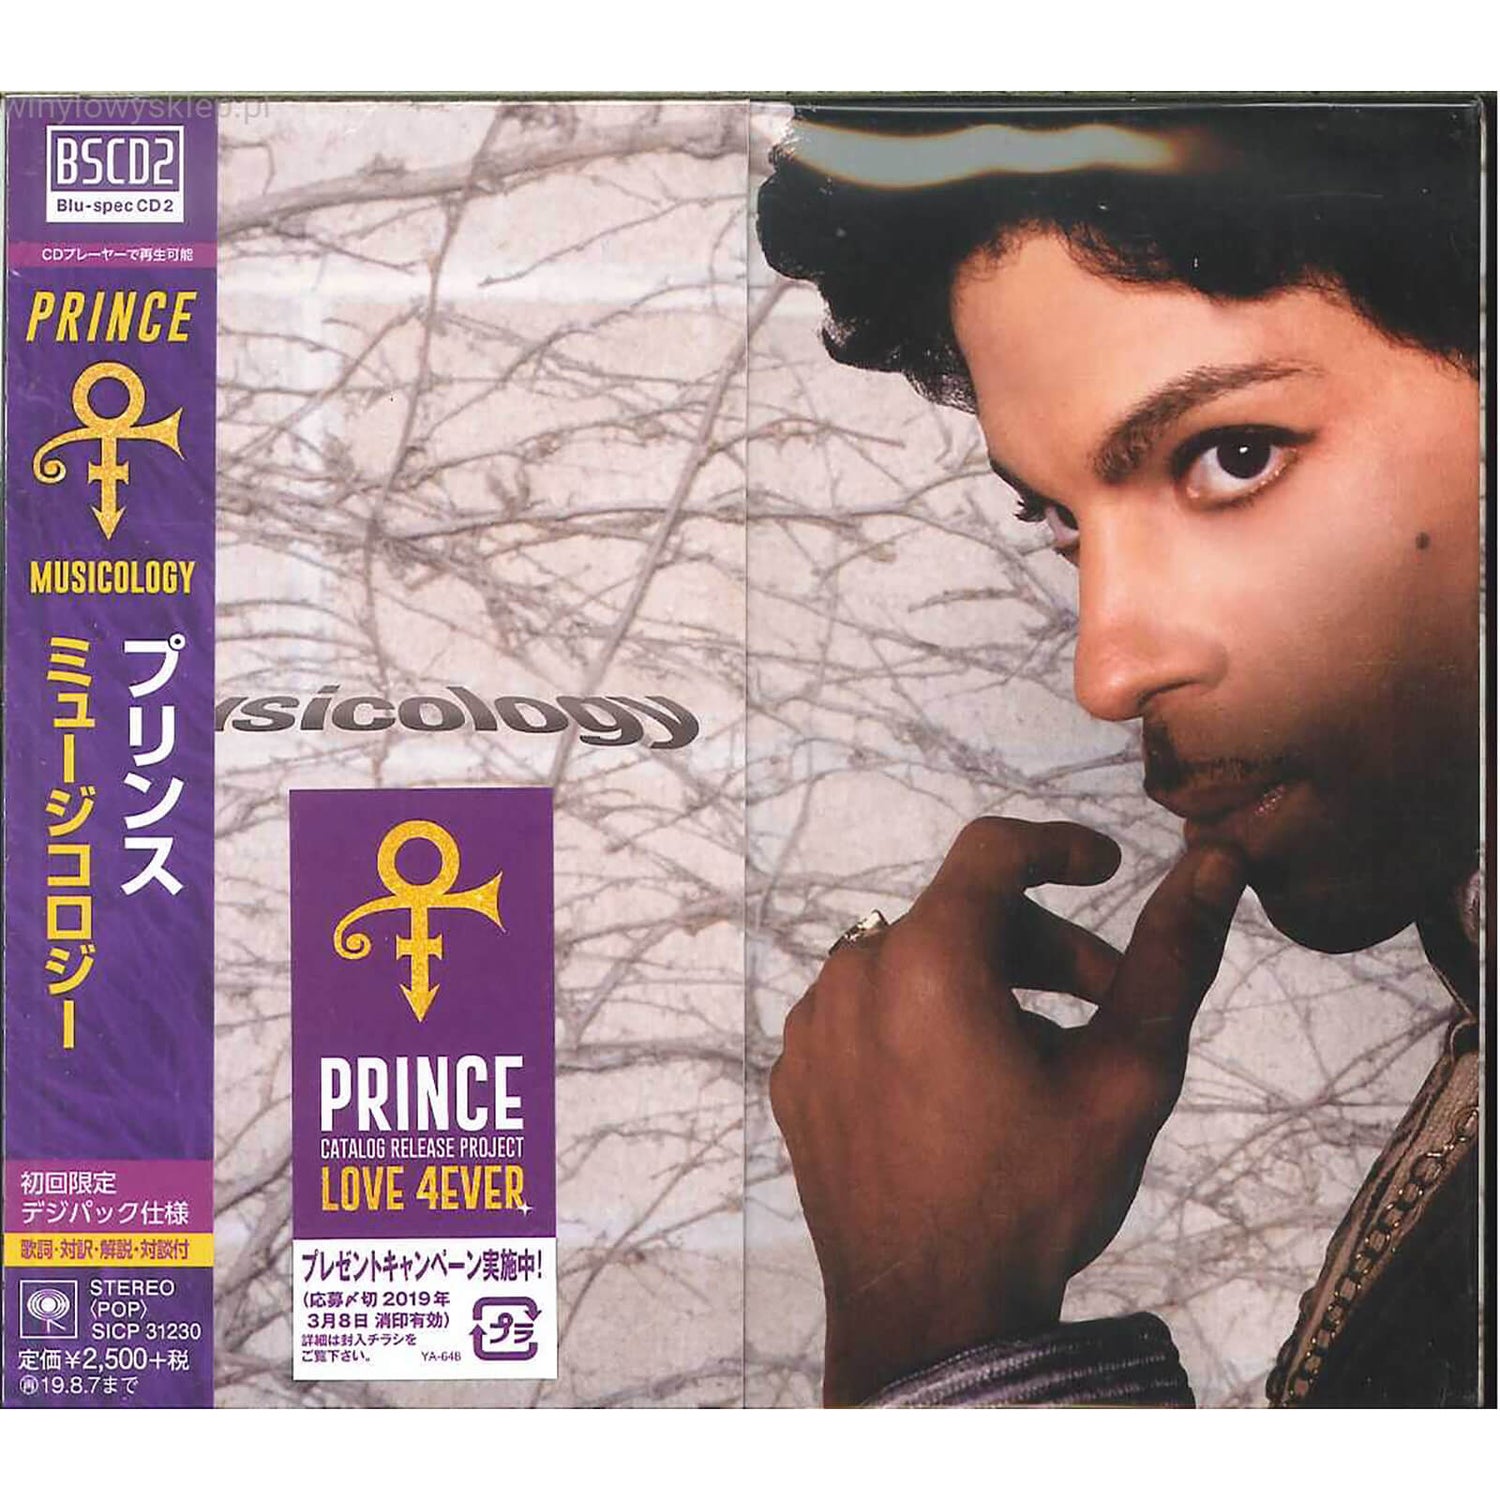 Prince - Musicology Vinyl Japanese Edition